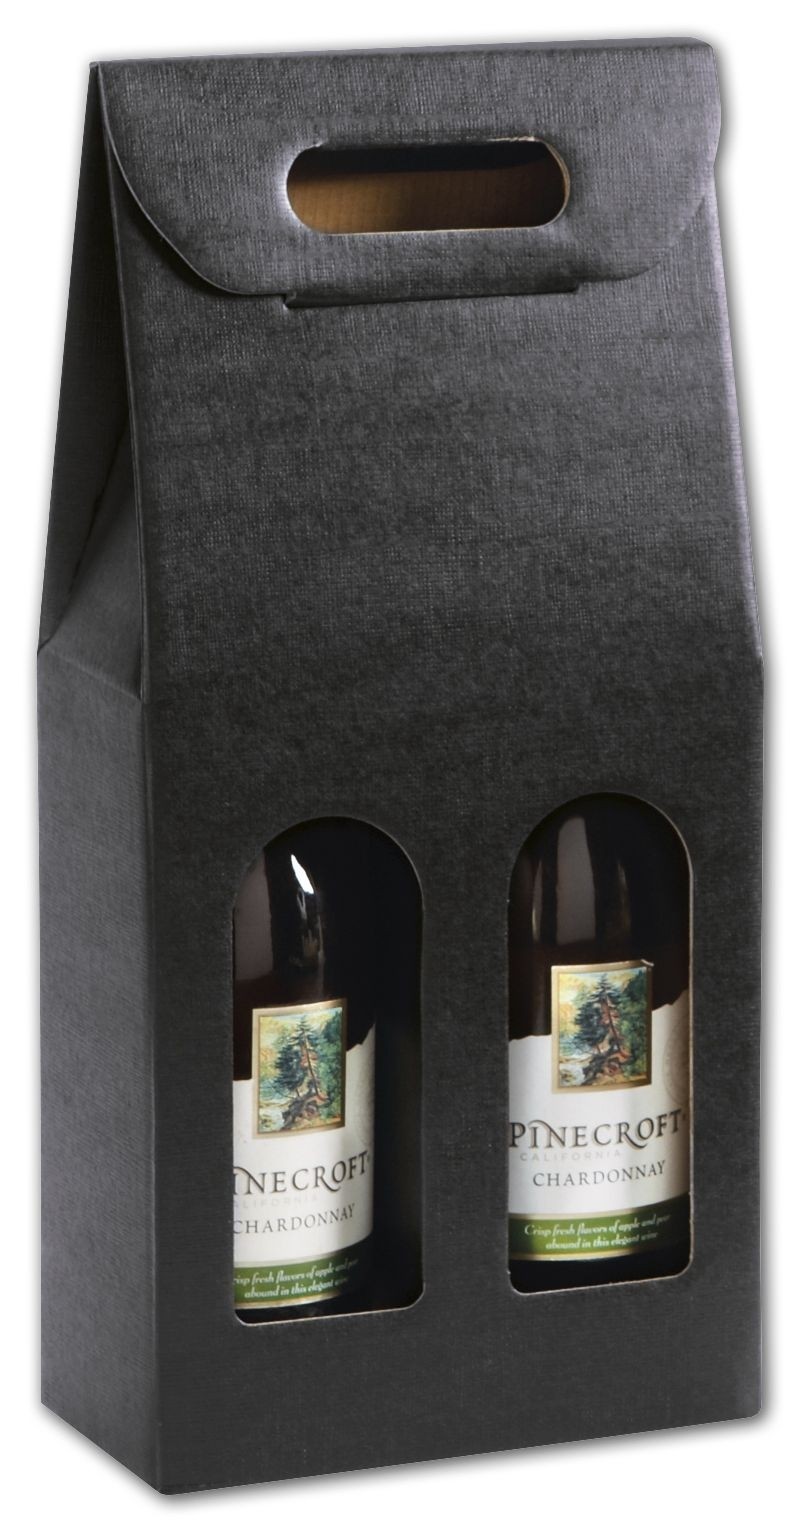 Black embossed 2 wine bottle carriers 7 x 3 1